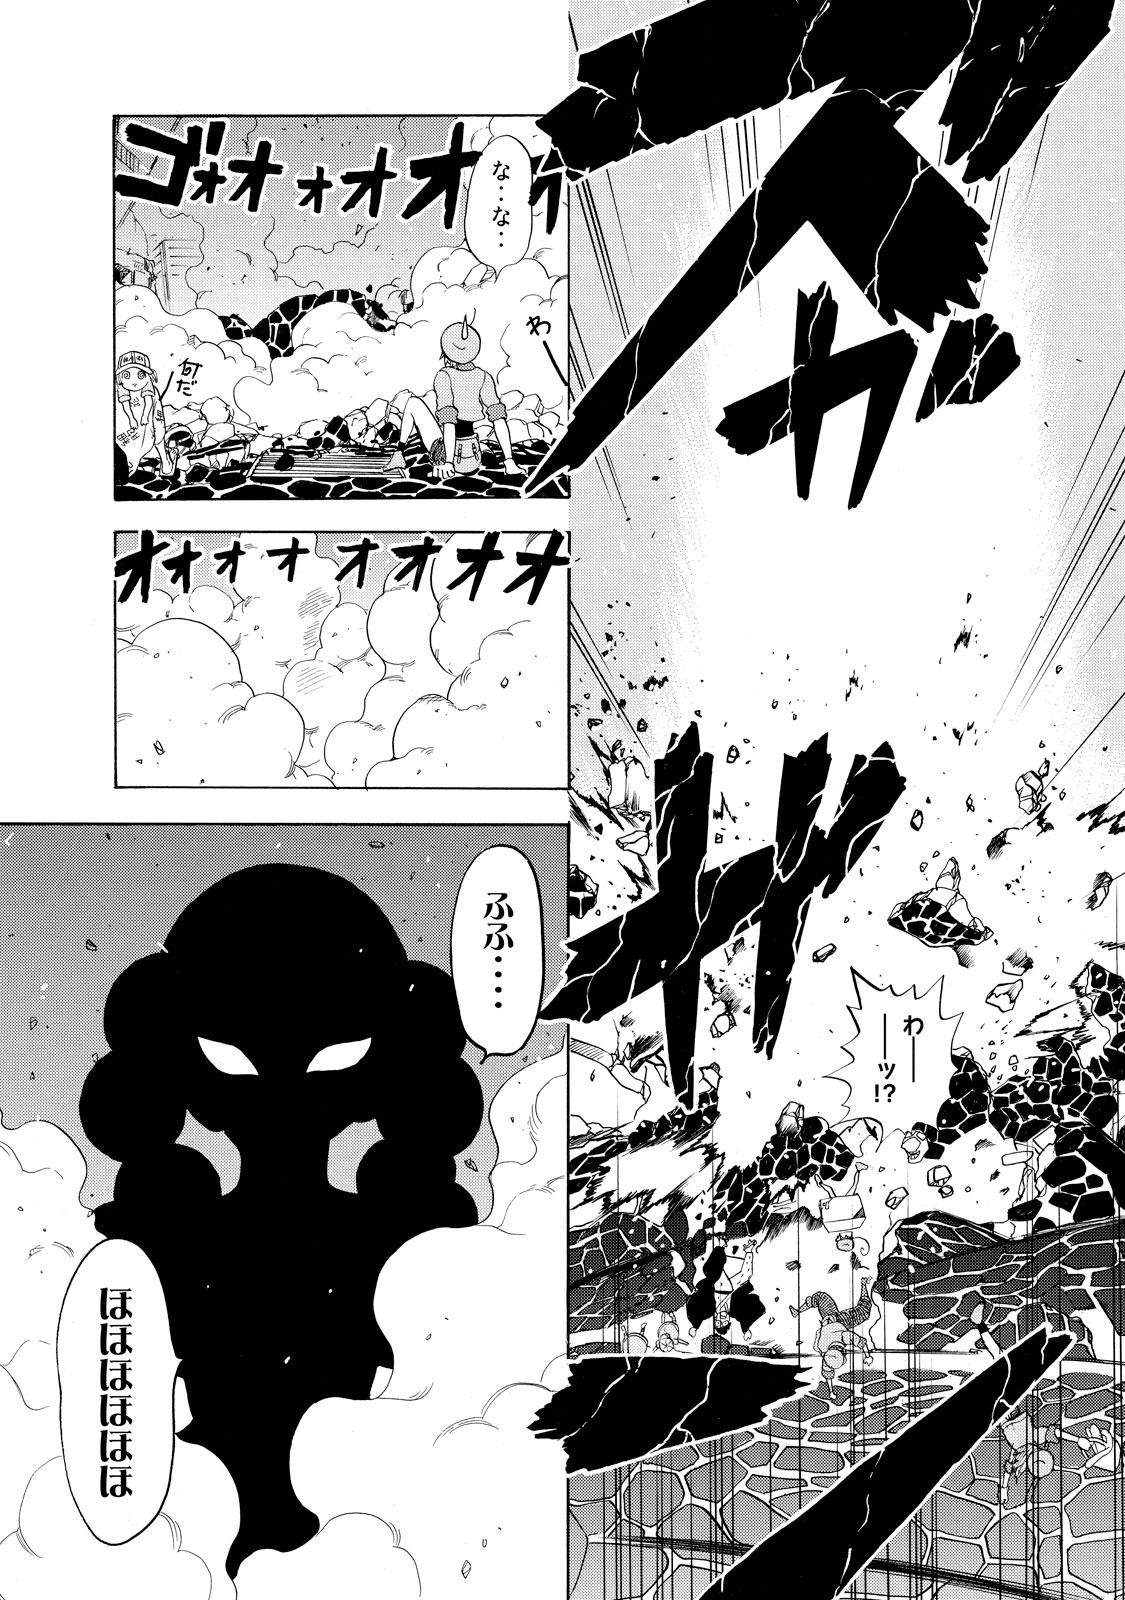 Hataraku Saibou - Chapter 15 - Page 11